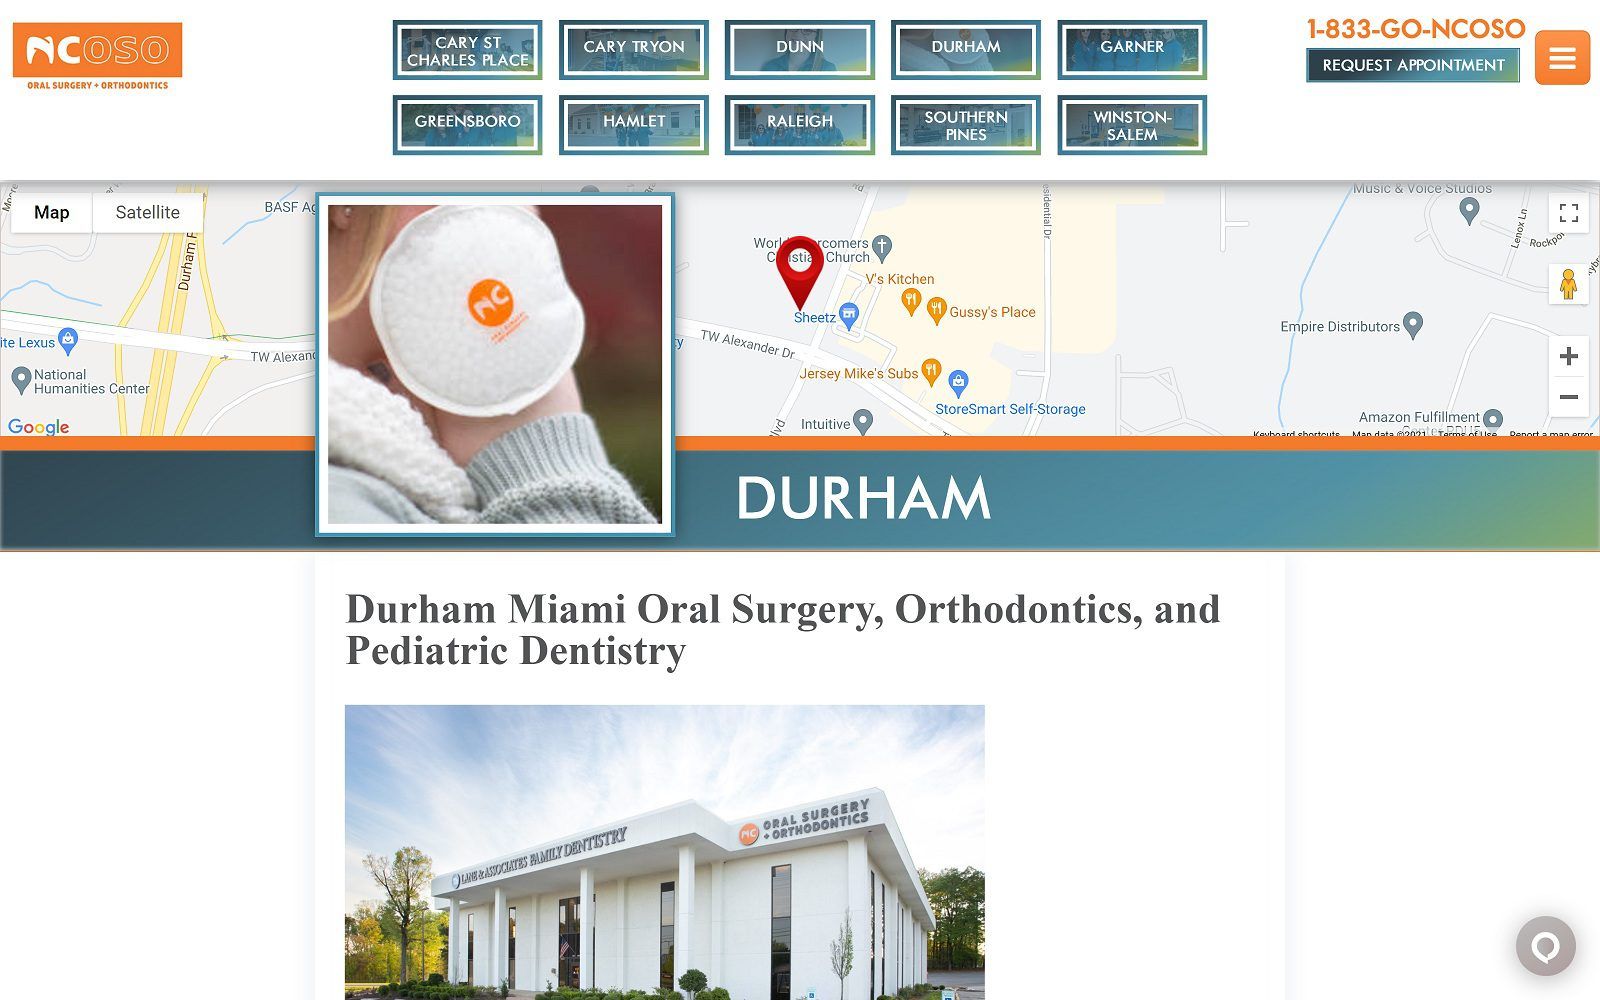 The screenshot of north carolina oral surgery + orthodontics - durham miami website